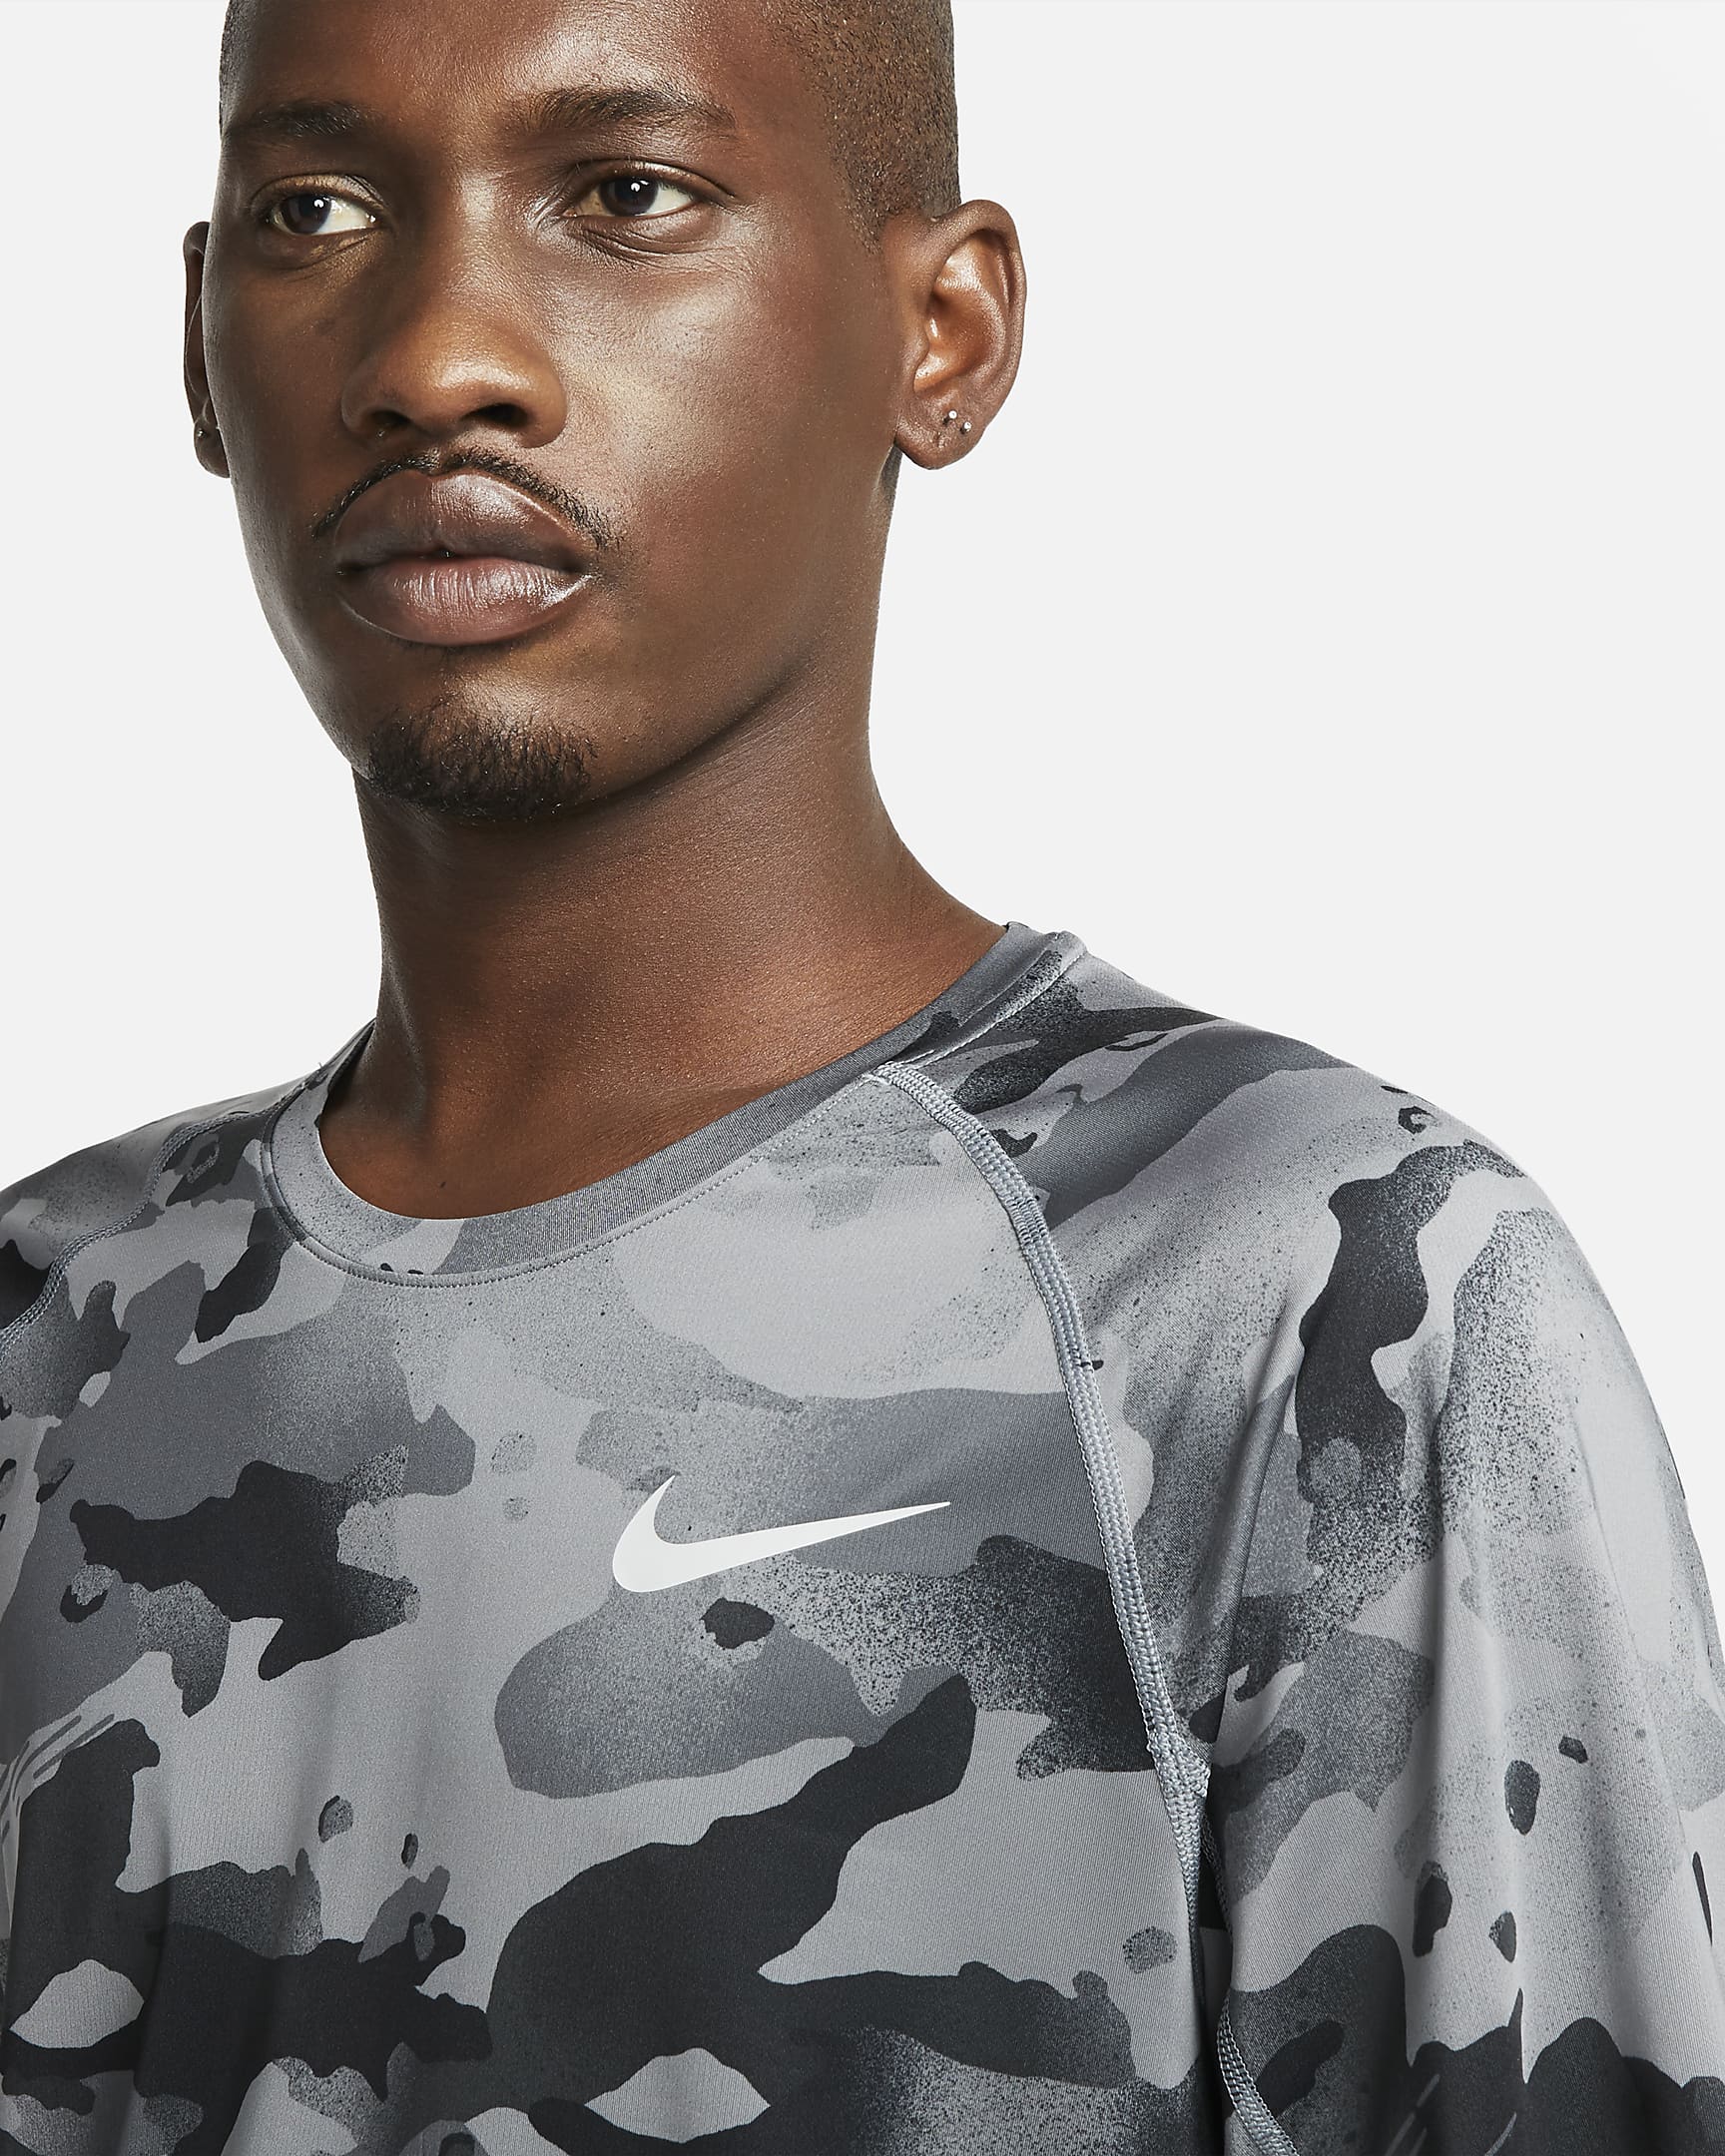 Nike Pro Men's Short-Sleeve Camo Top. Nike HR